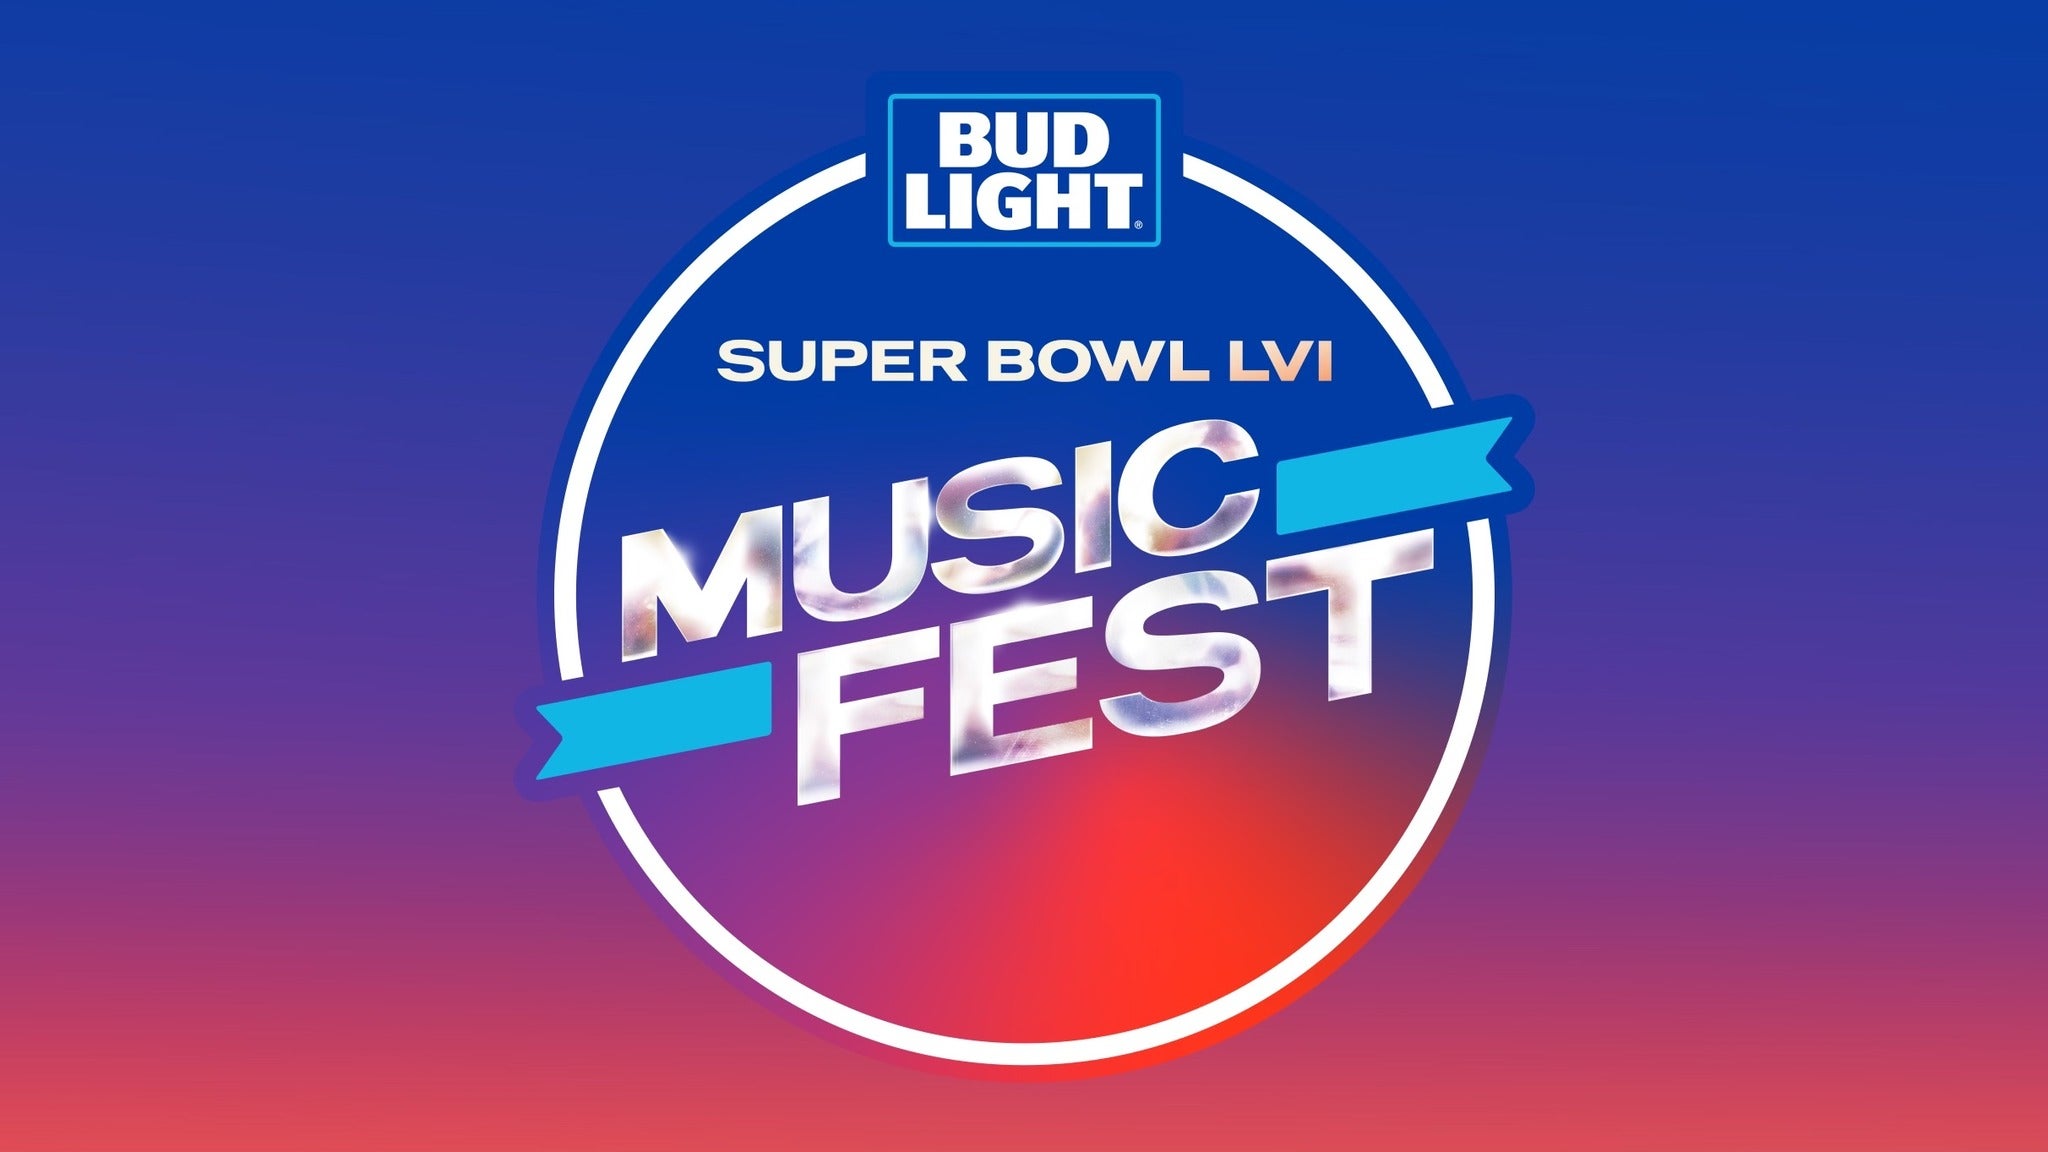 Bud Light Super Bowl Music Fest: Halsey/Machine Gun Kelly in Los Angeles promo photo for 1 3PM presale offer code